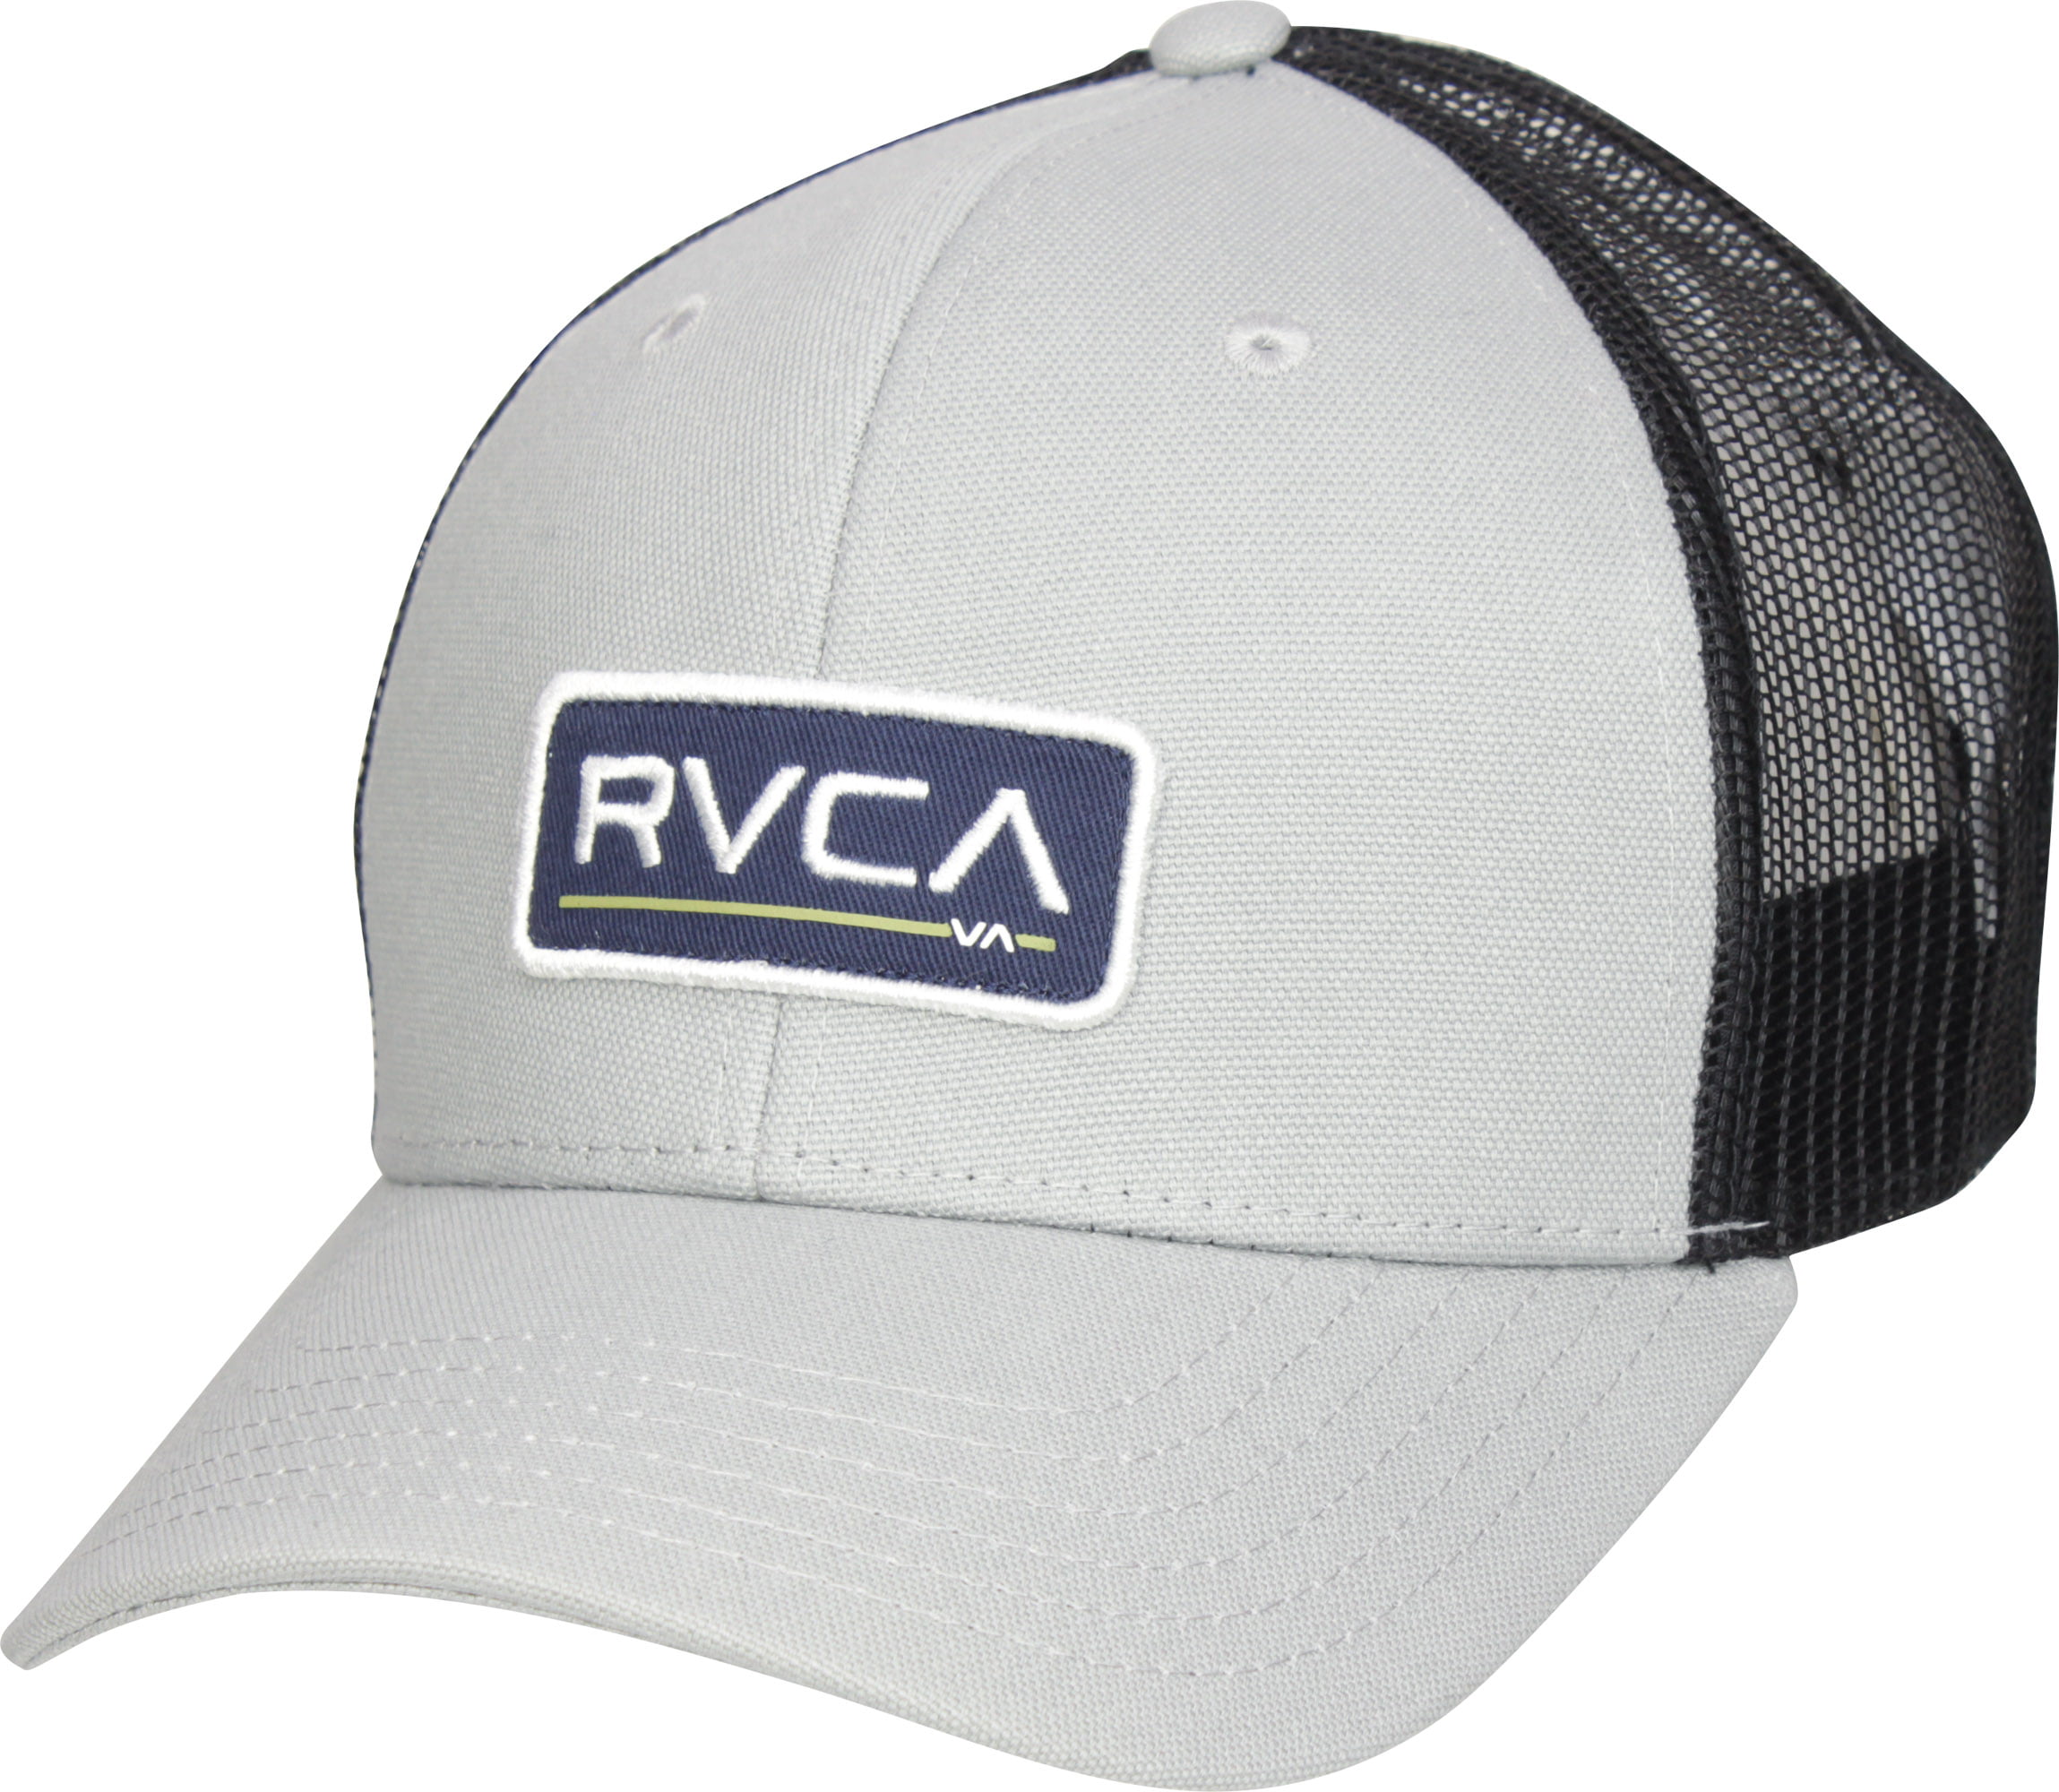 RVCA Ticket Mid Fit Trucker Snapback Hat Light Grey Black 